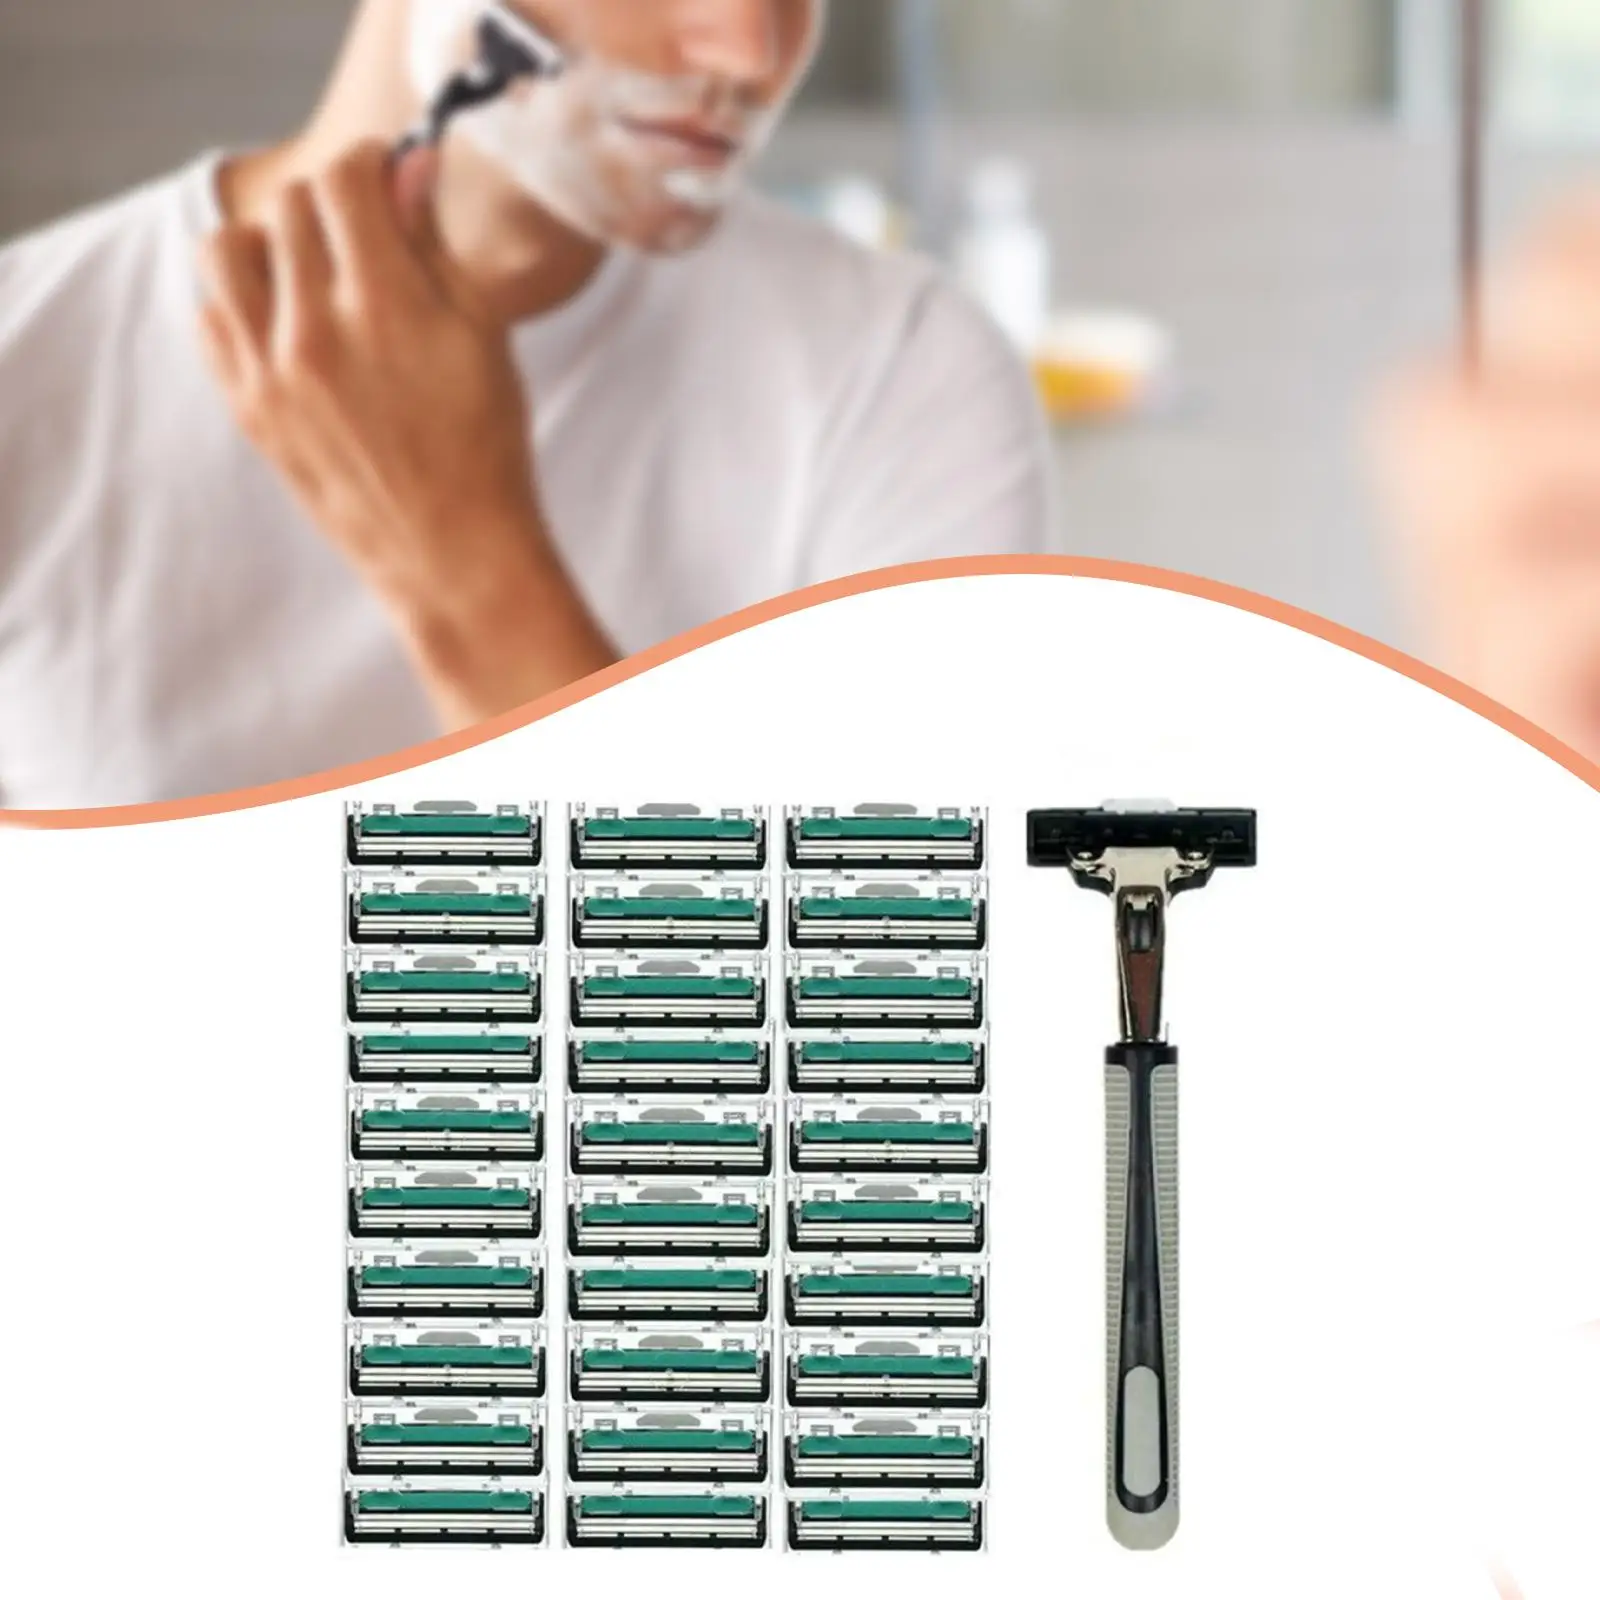 Double Edge Shaver Face Shaving Heavy Duty Hair Remover Anti Slip Handle for Home